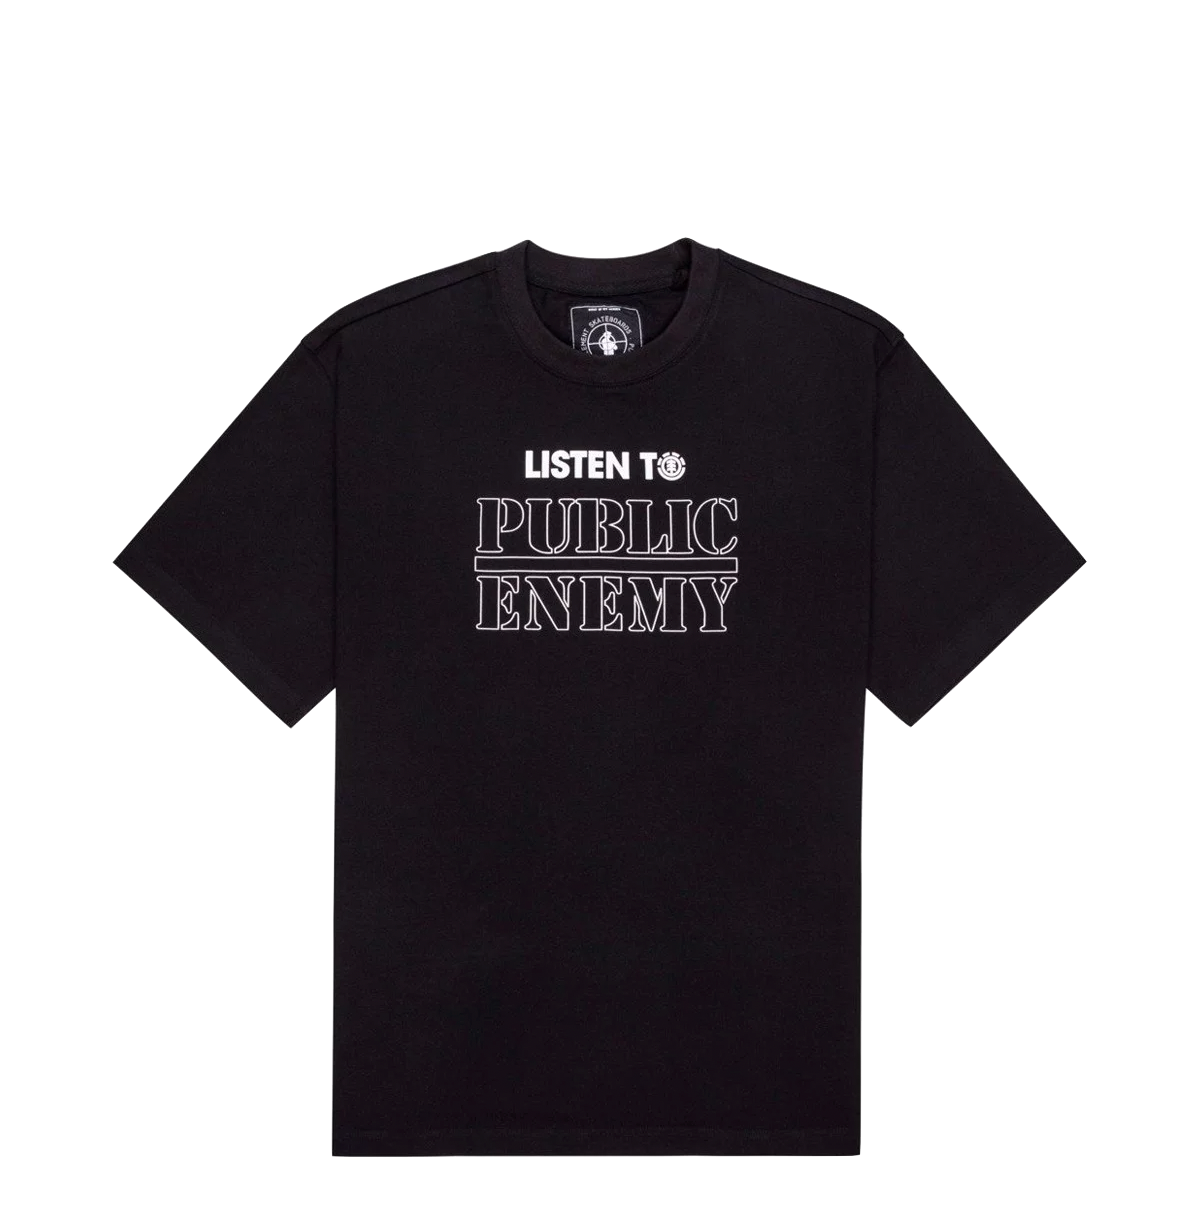 Element X Public Enemy tee Listen To black